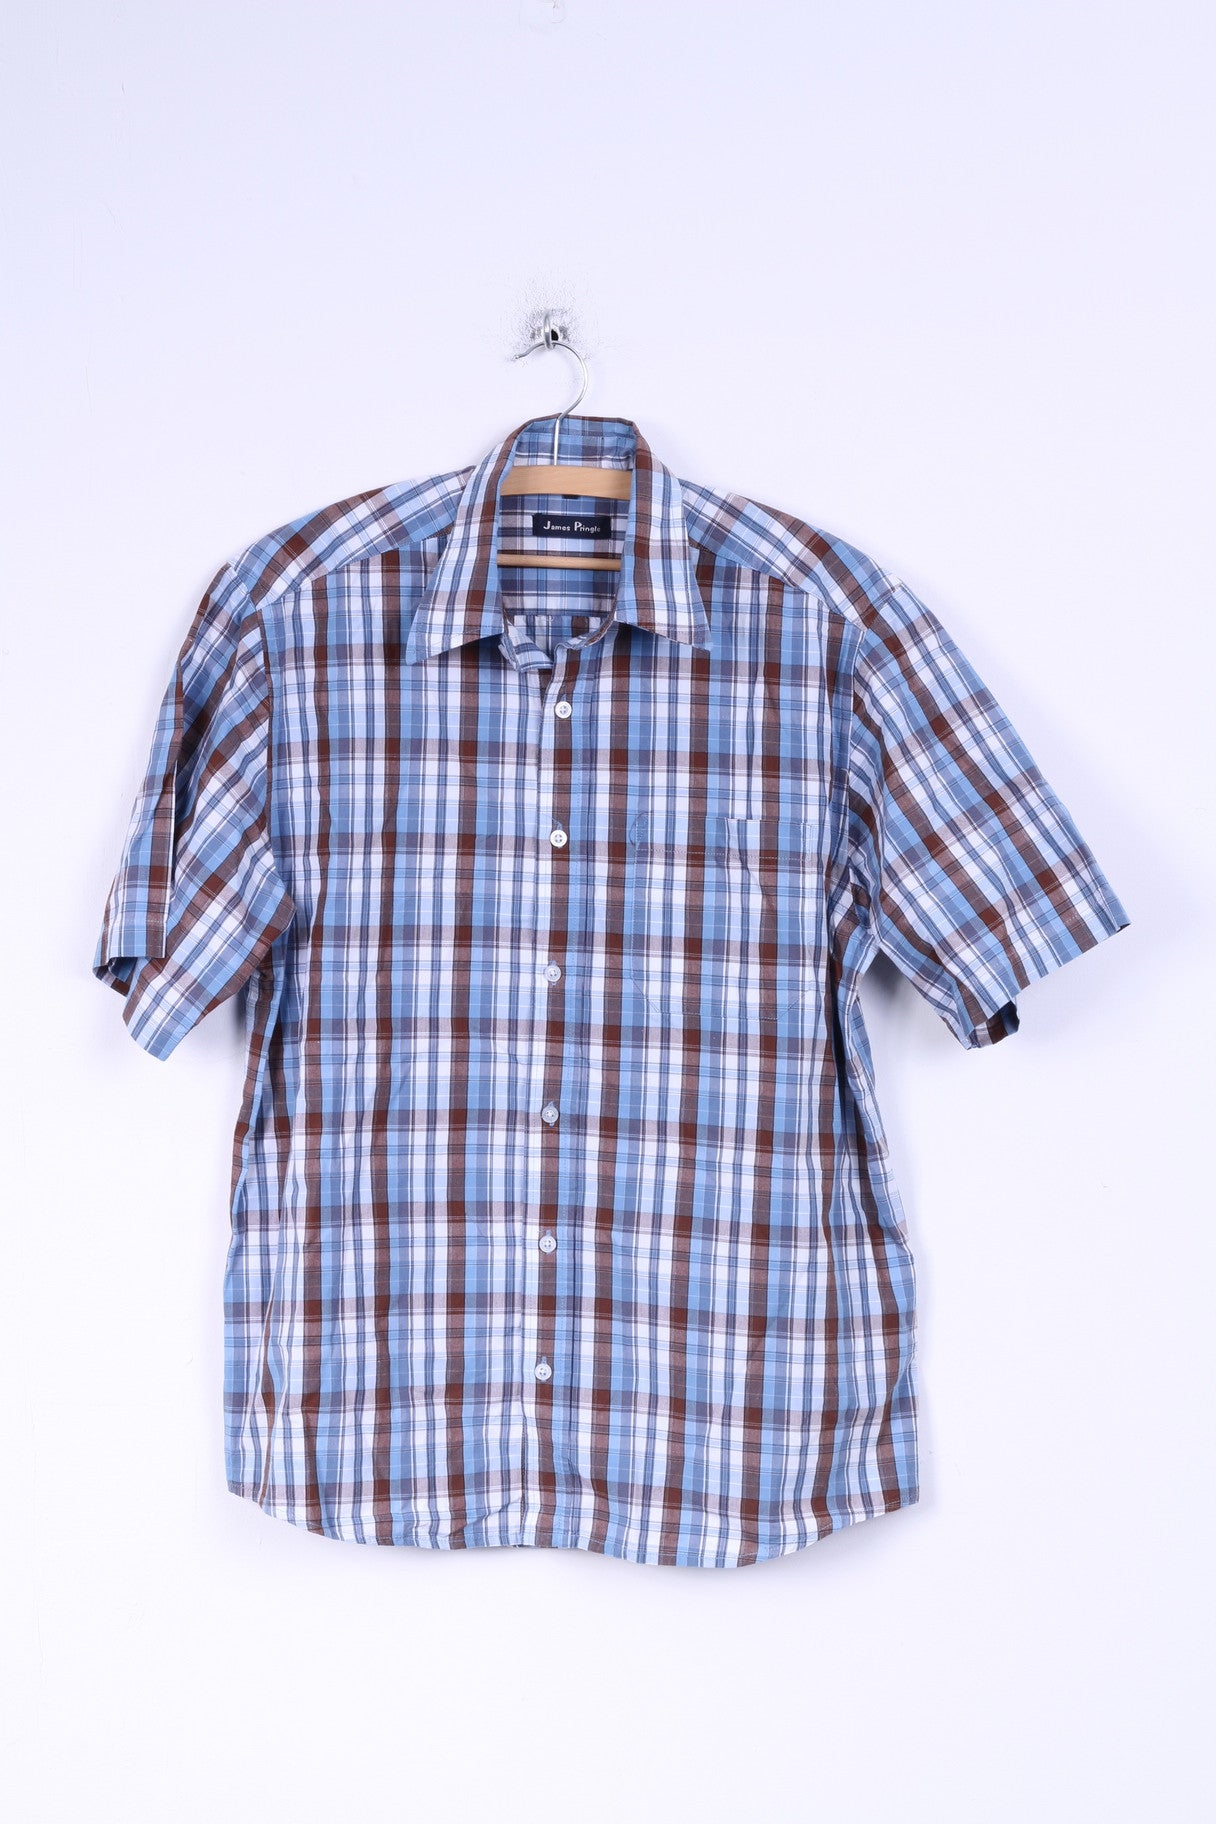 James Pringle Mens M Casual Shirt Short Sleeve Check Blue Cotton ...